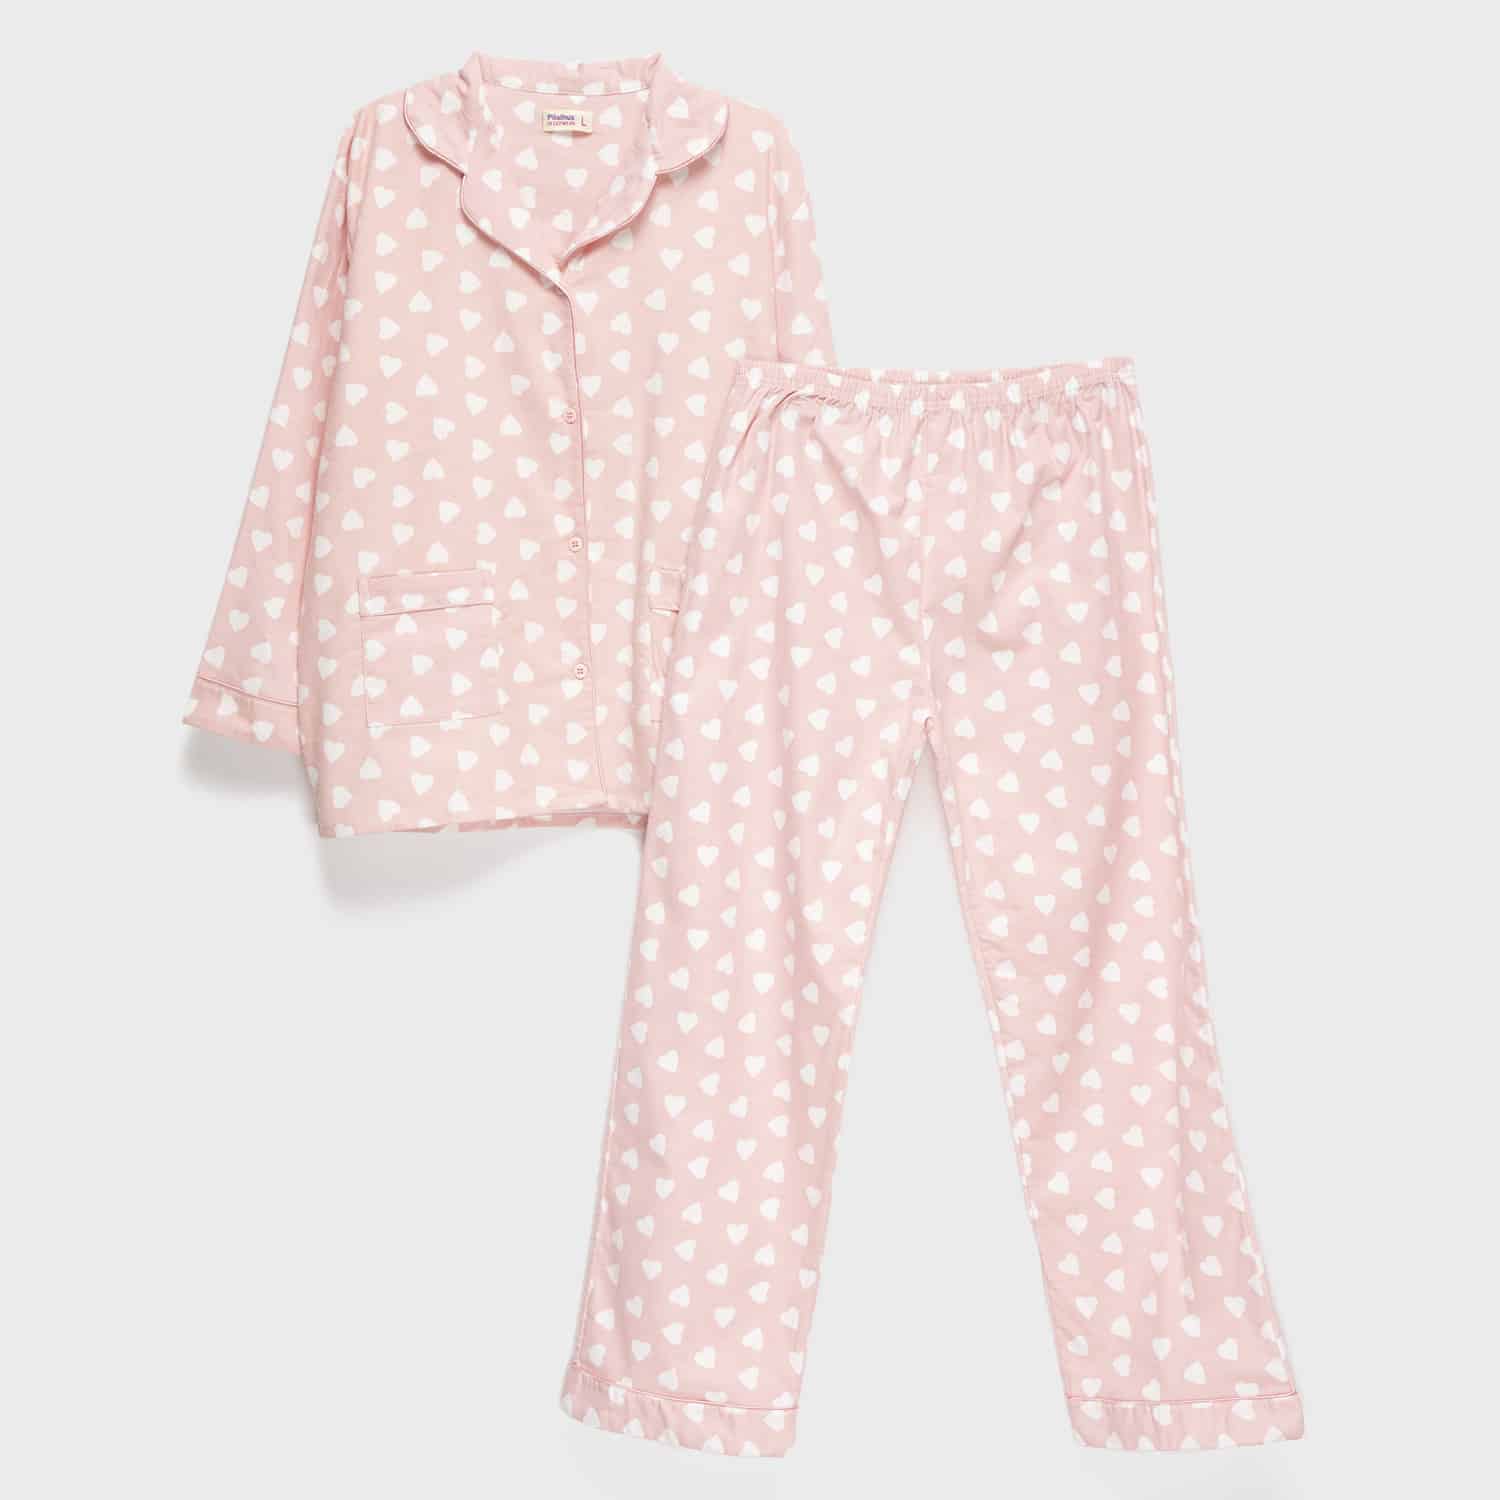 Pijama Franela Mujer Rosado Corazones - Textiles Zahr